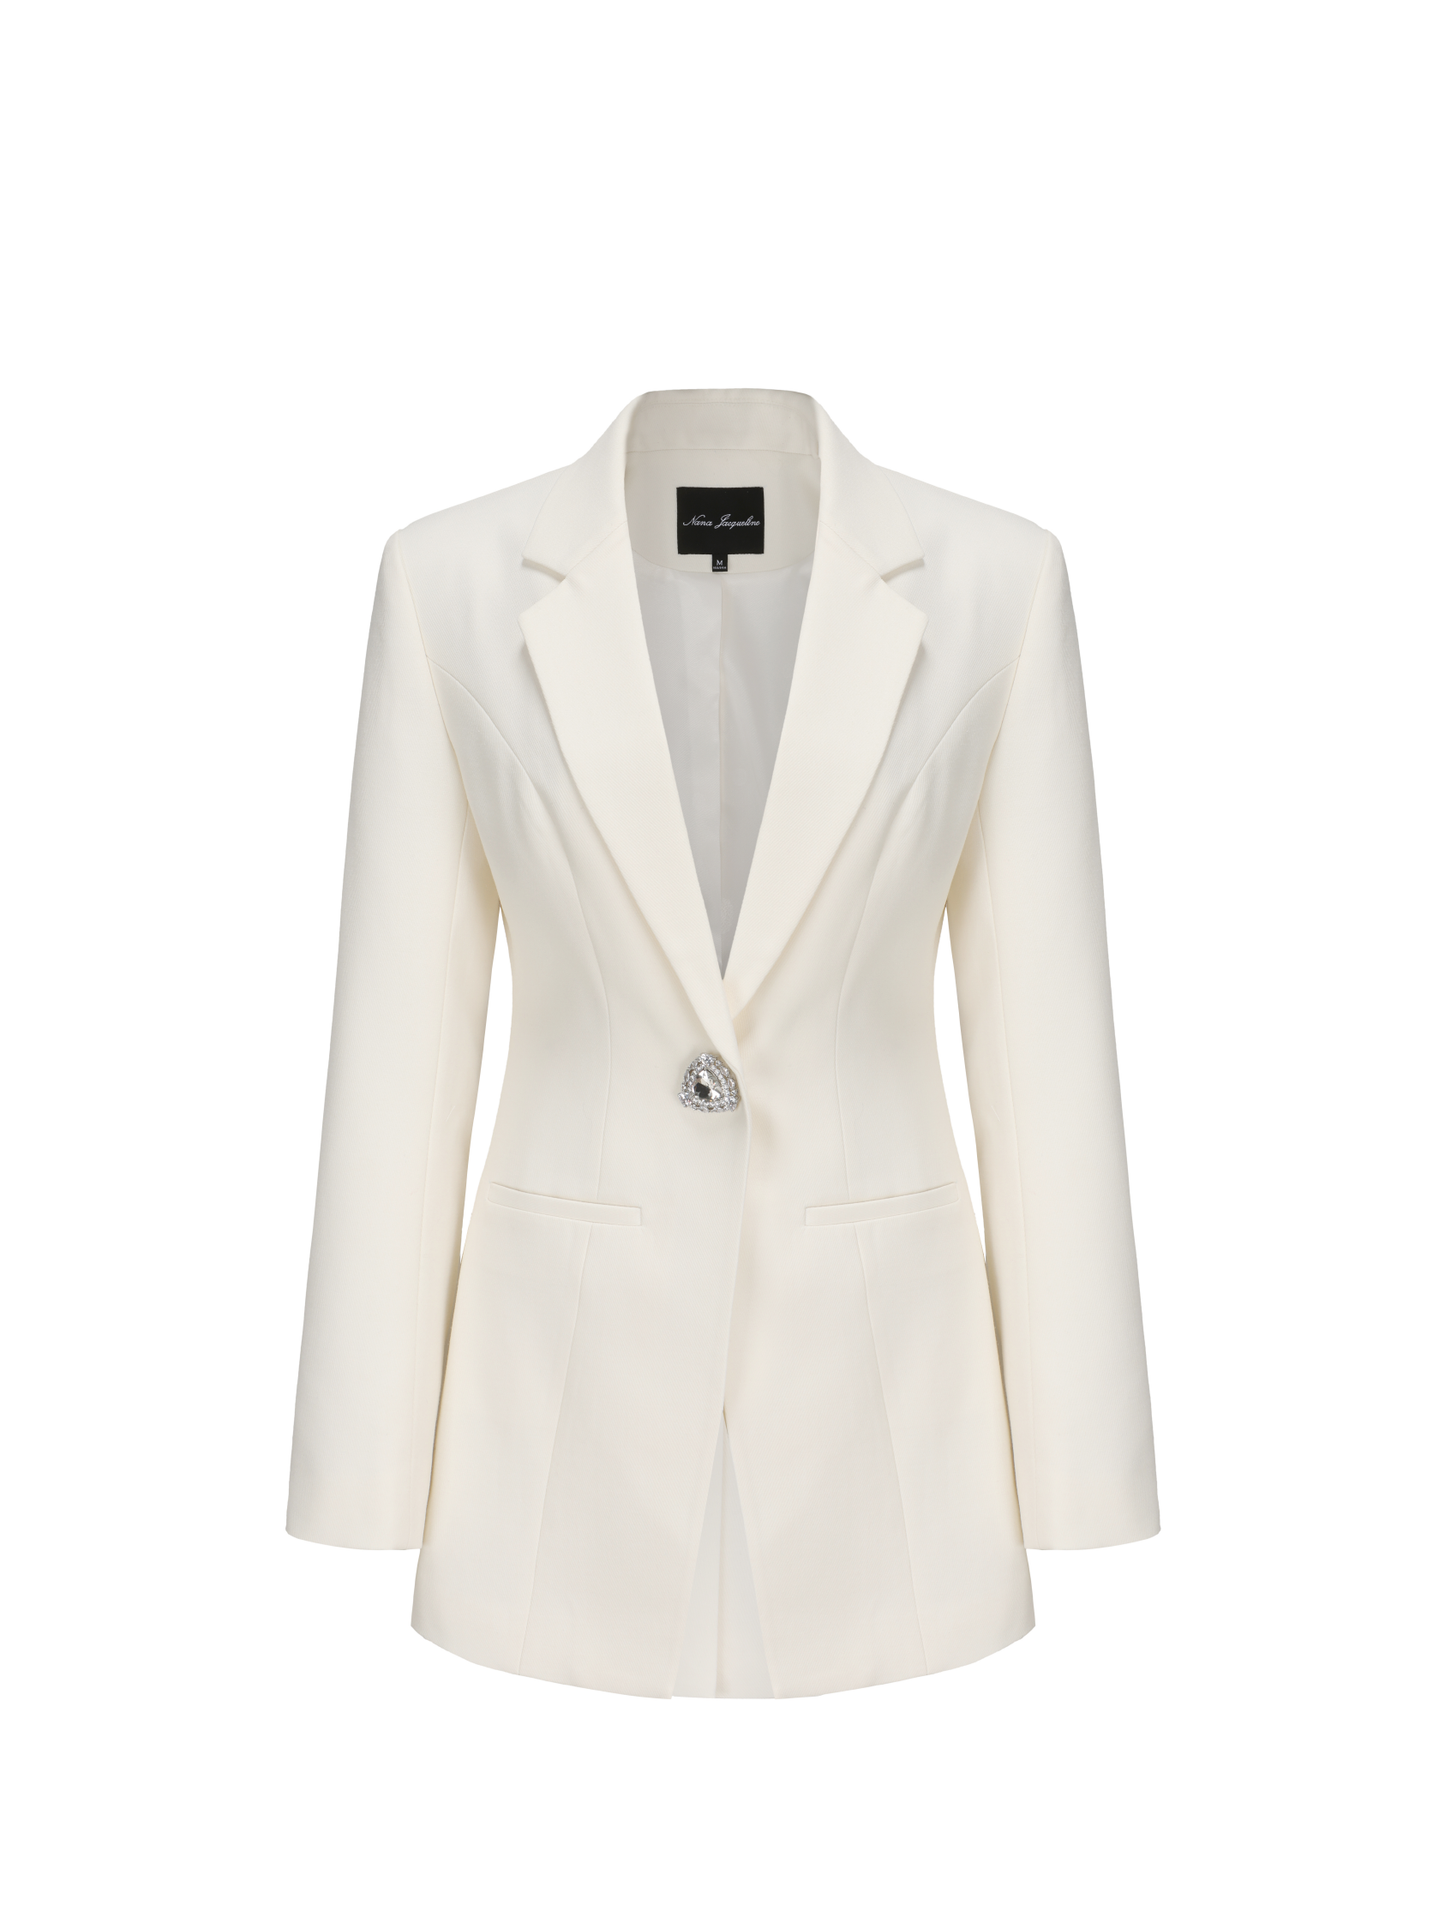 Thalia Suit Jacket (White) (Final Sale)